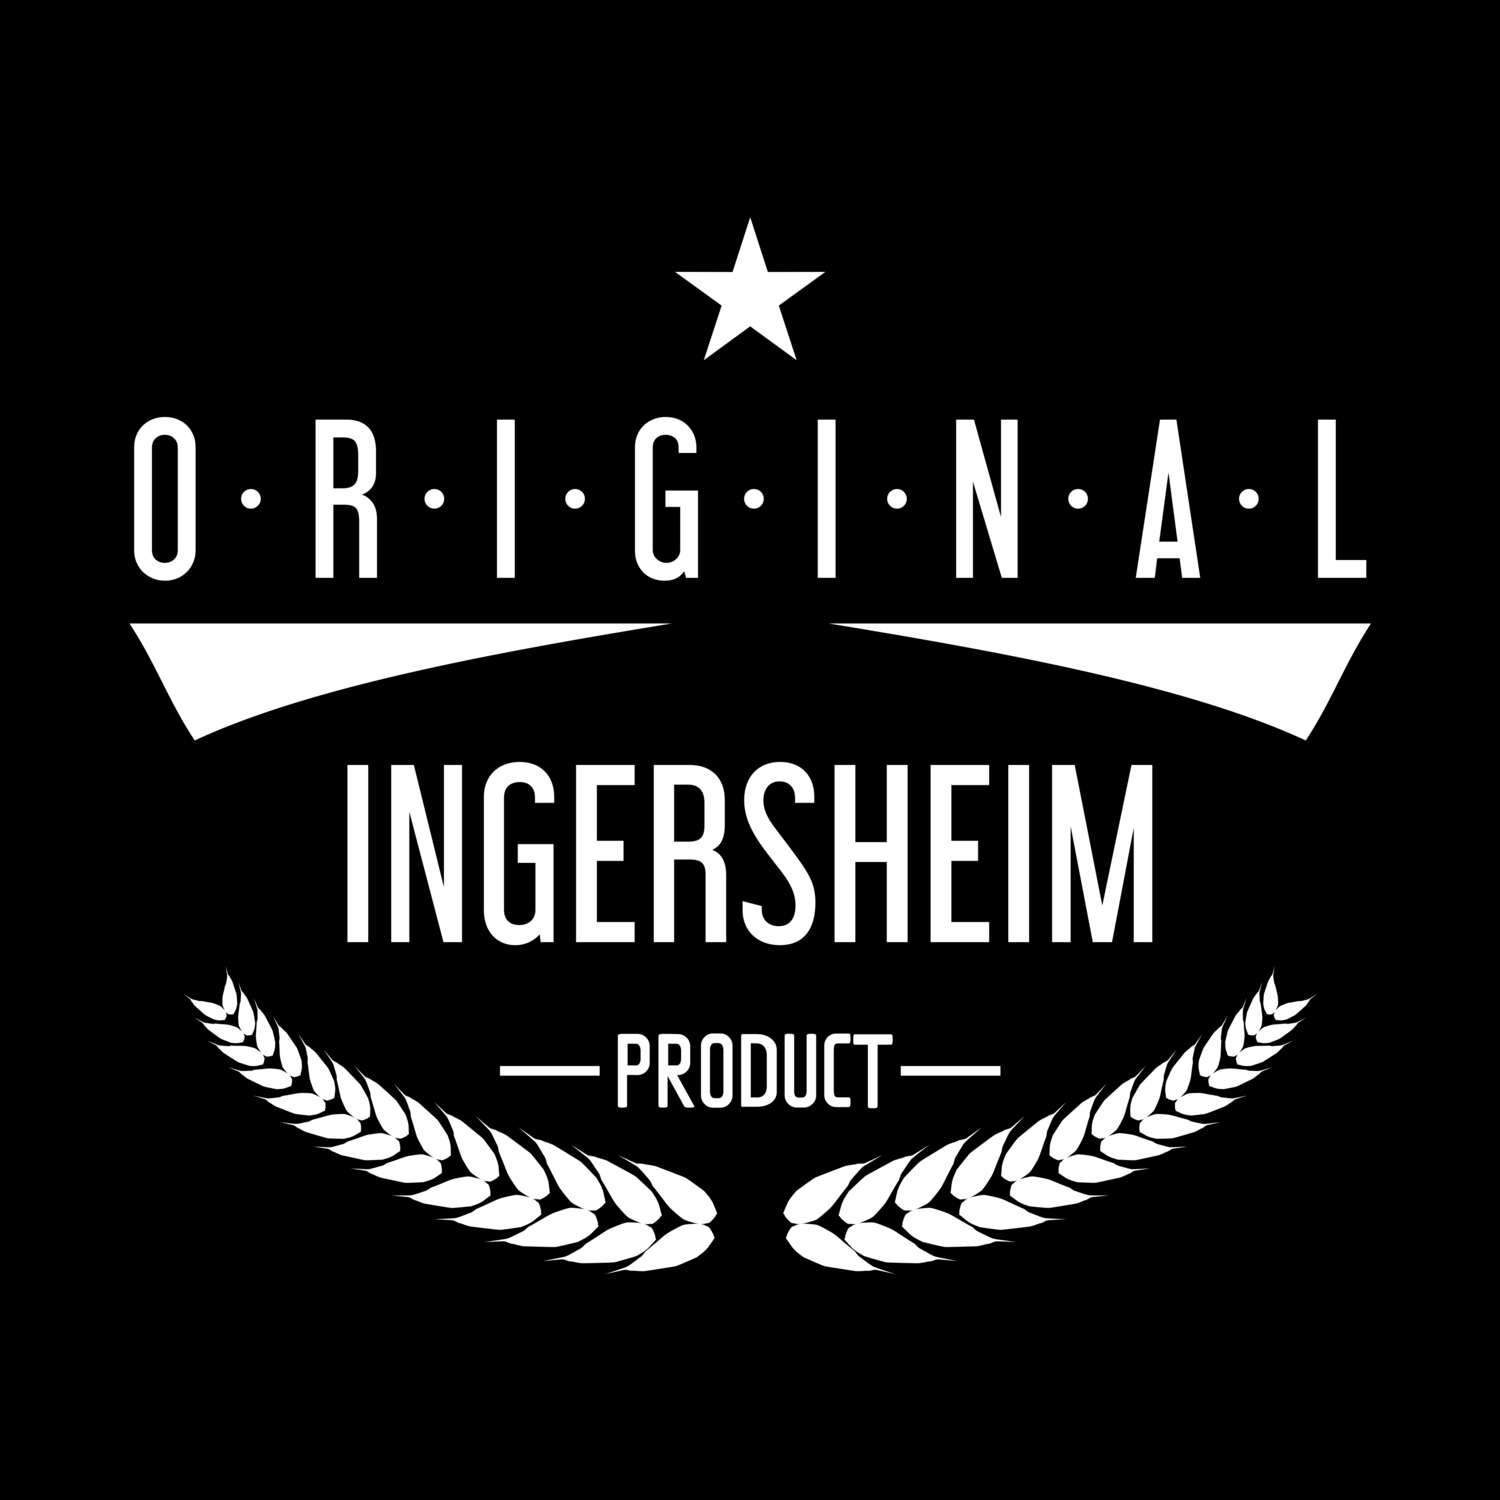 Ingersheim T-Shirt »Original Product«